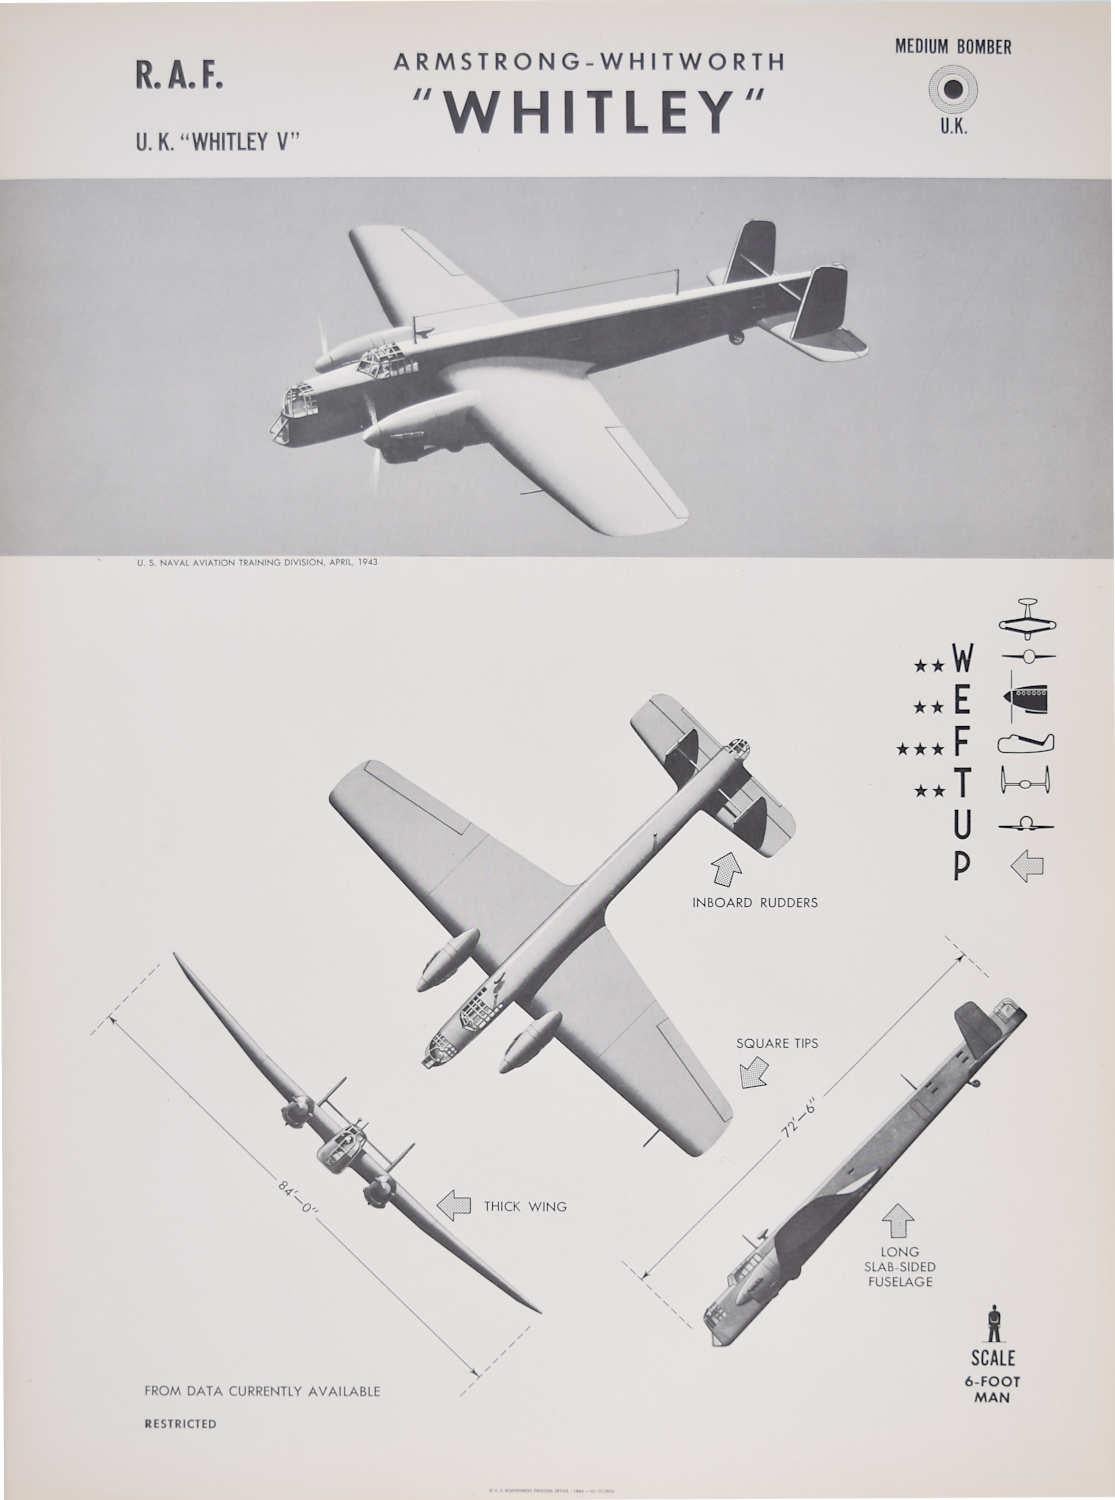 Affiche d'identification d'avion bombardier « Whitley » de la RAF Armstrong-Whitworth ww2 - Print de Unknown